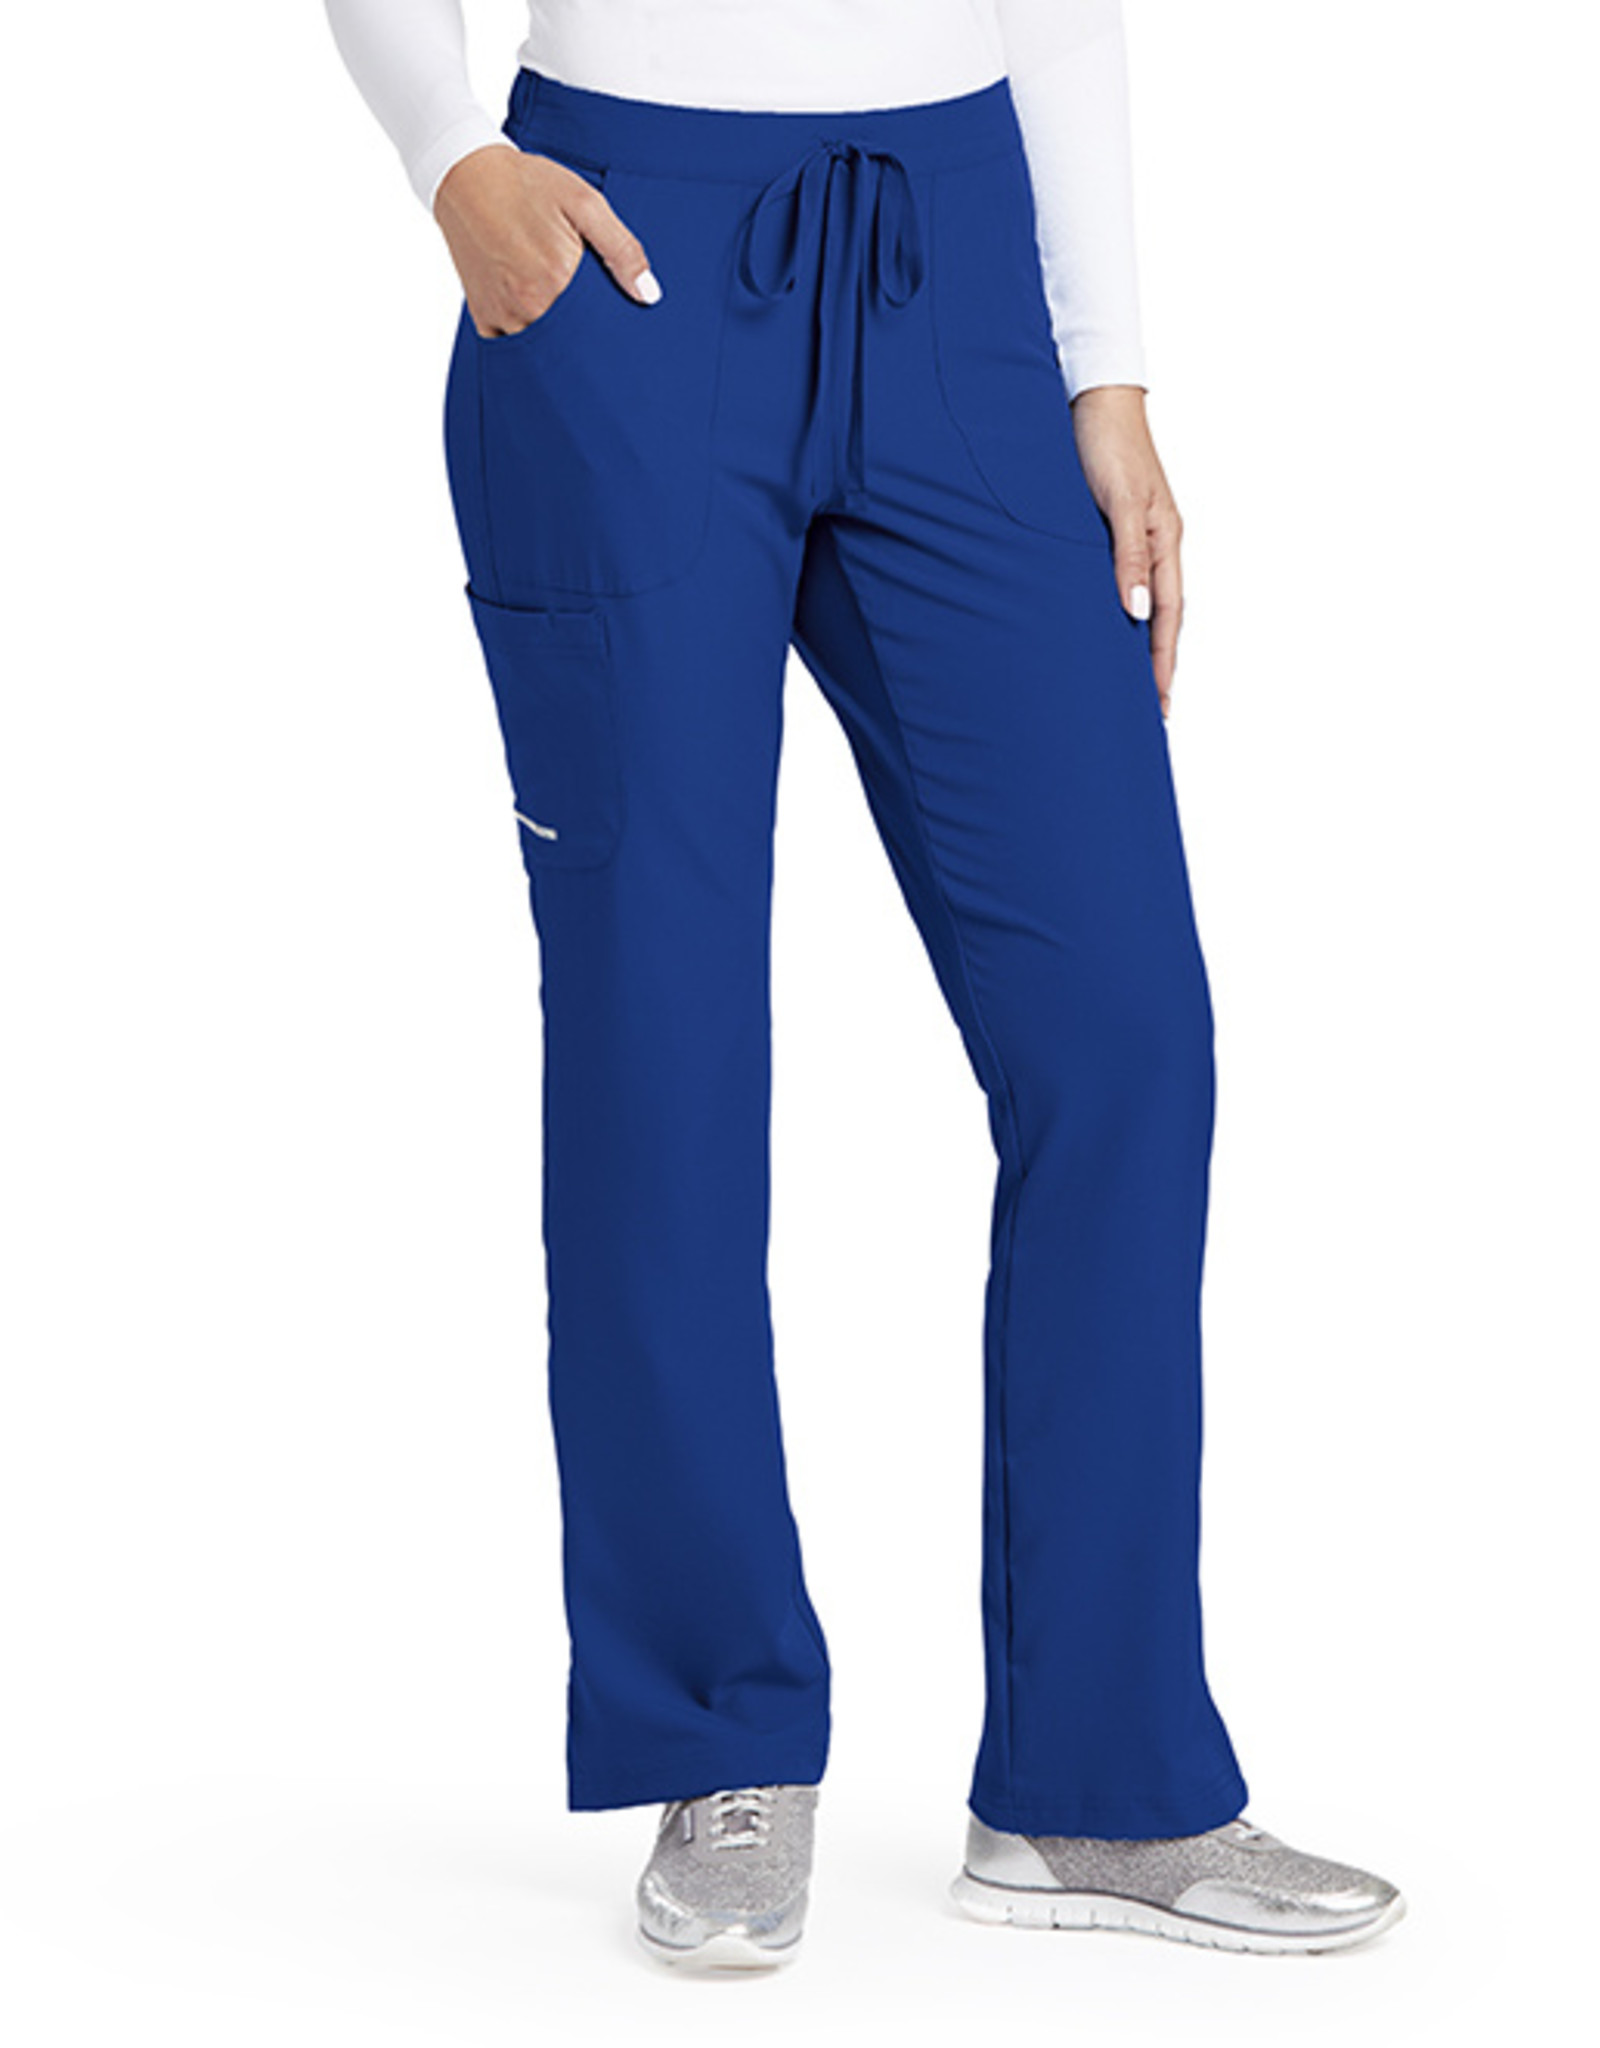 Skechers Women's 3-Pocket Reliance Pant (Plus Sizes) - Just Scrubs